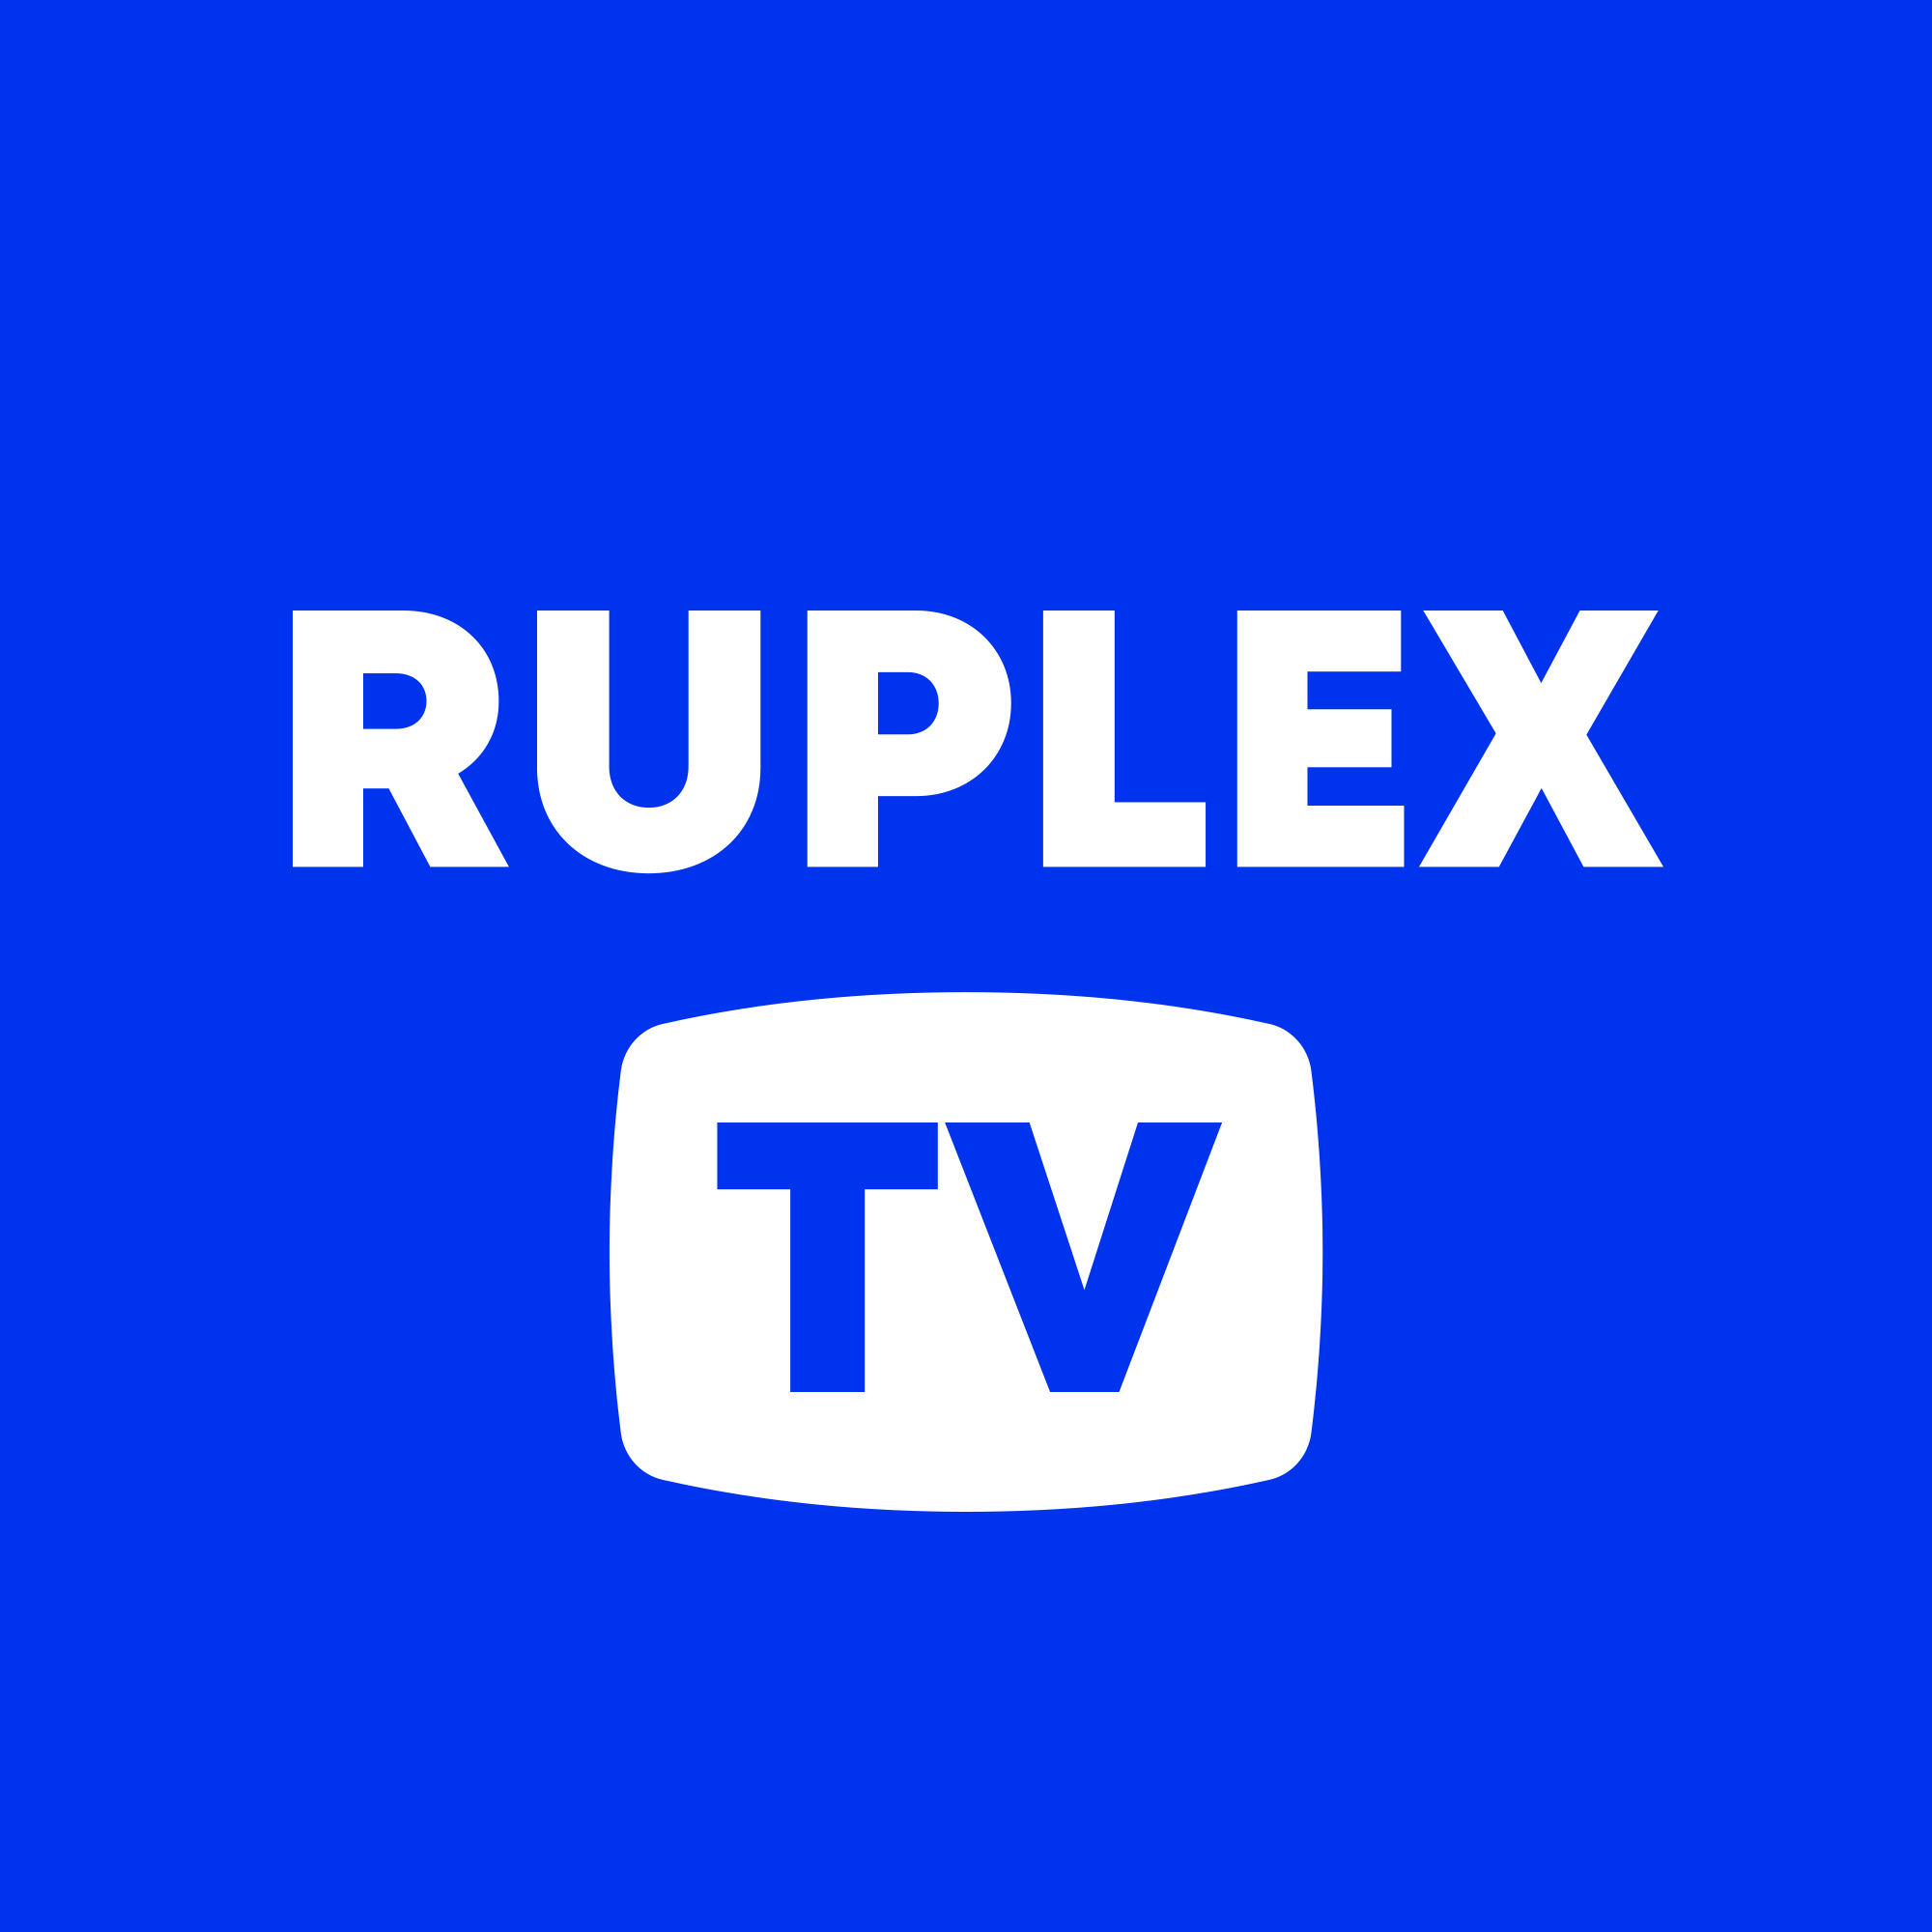 RuPlex